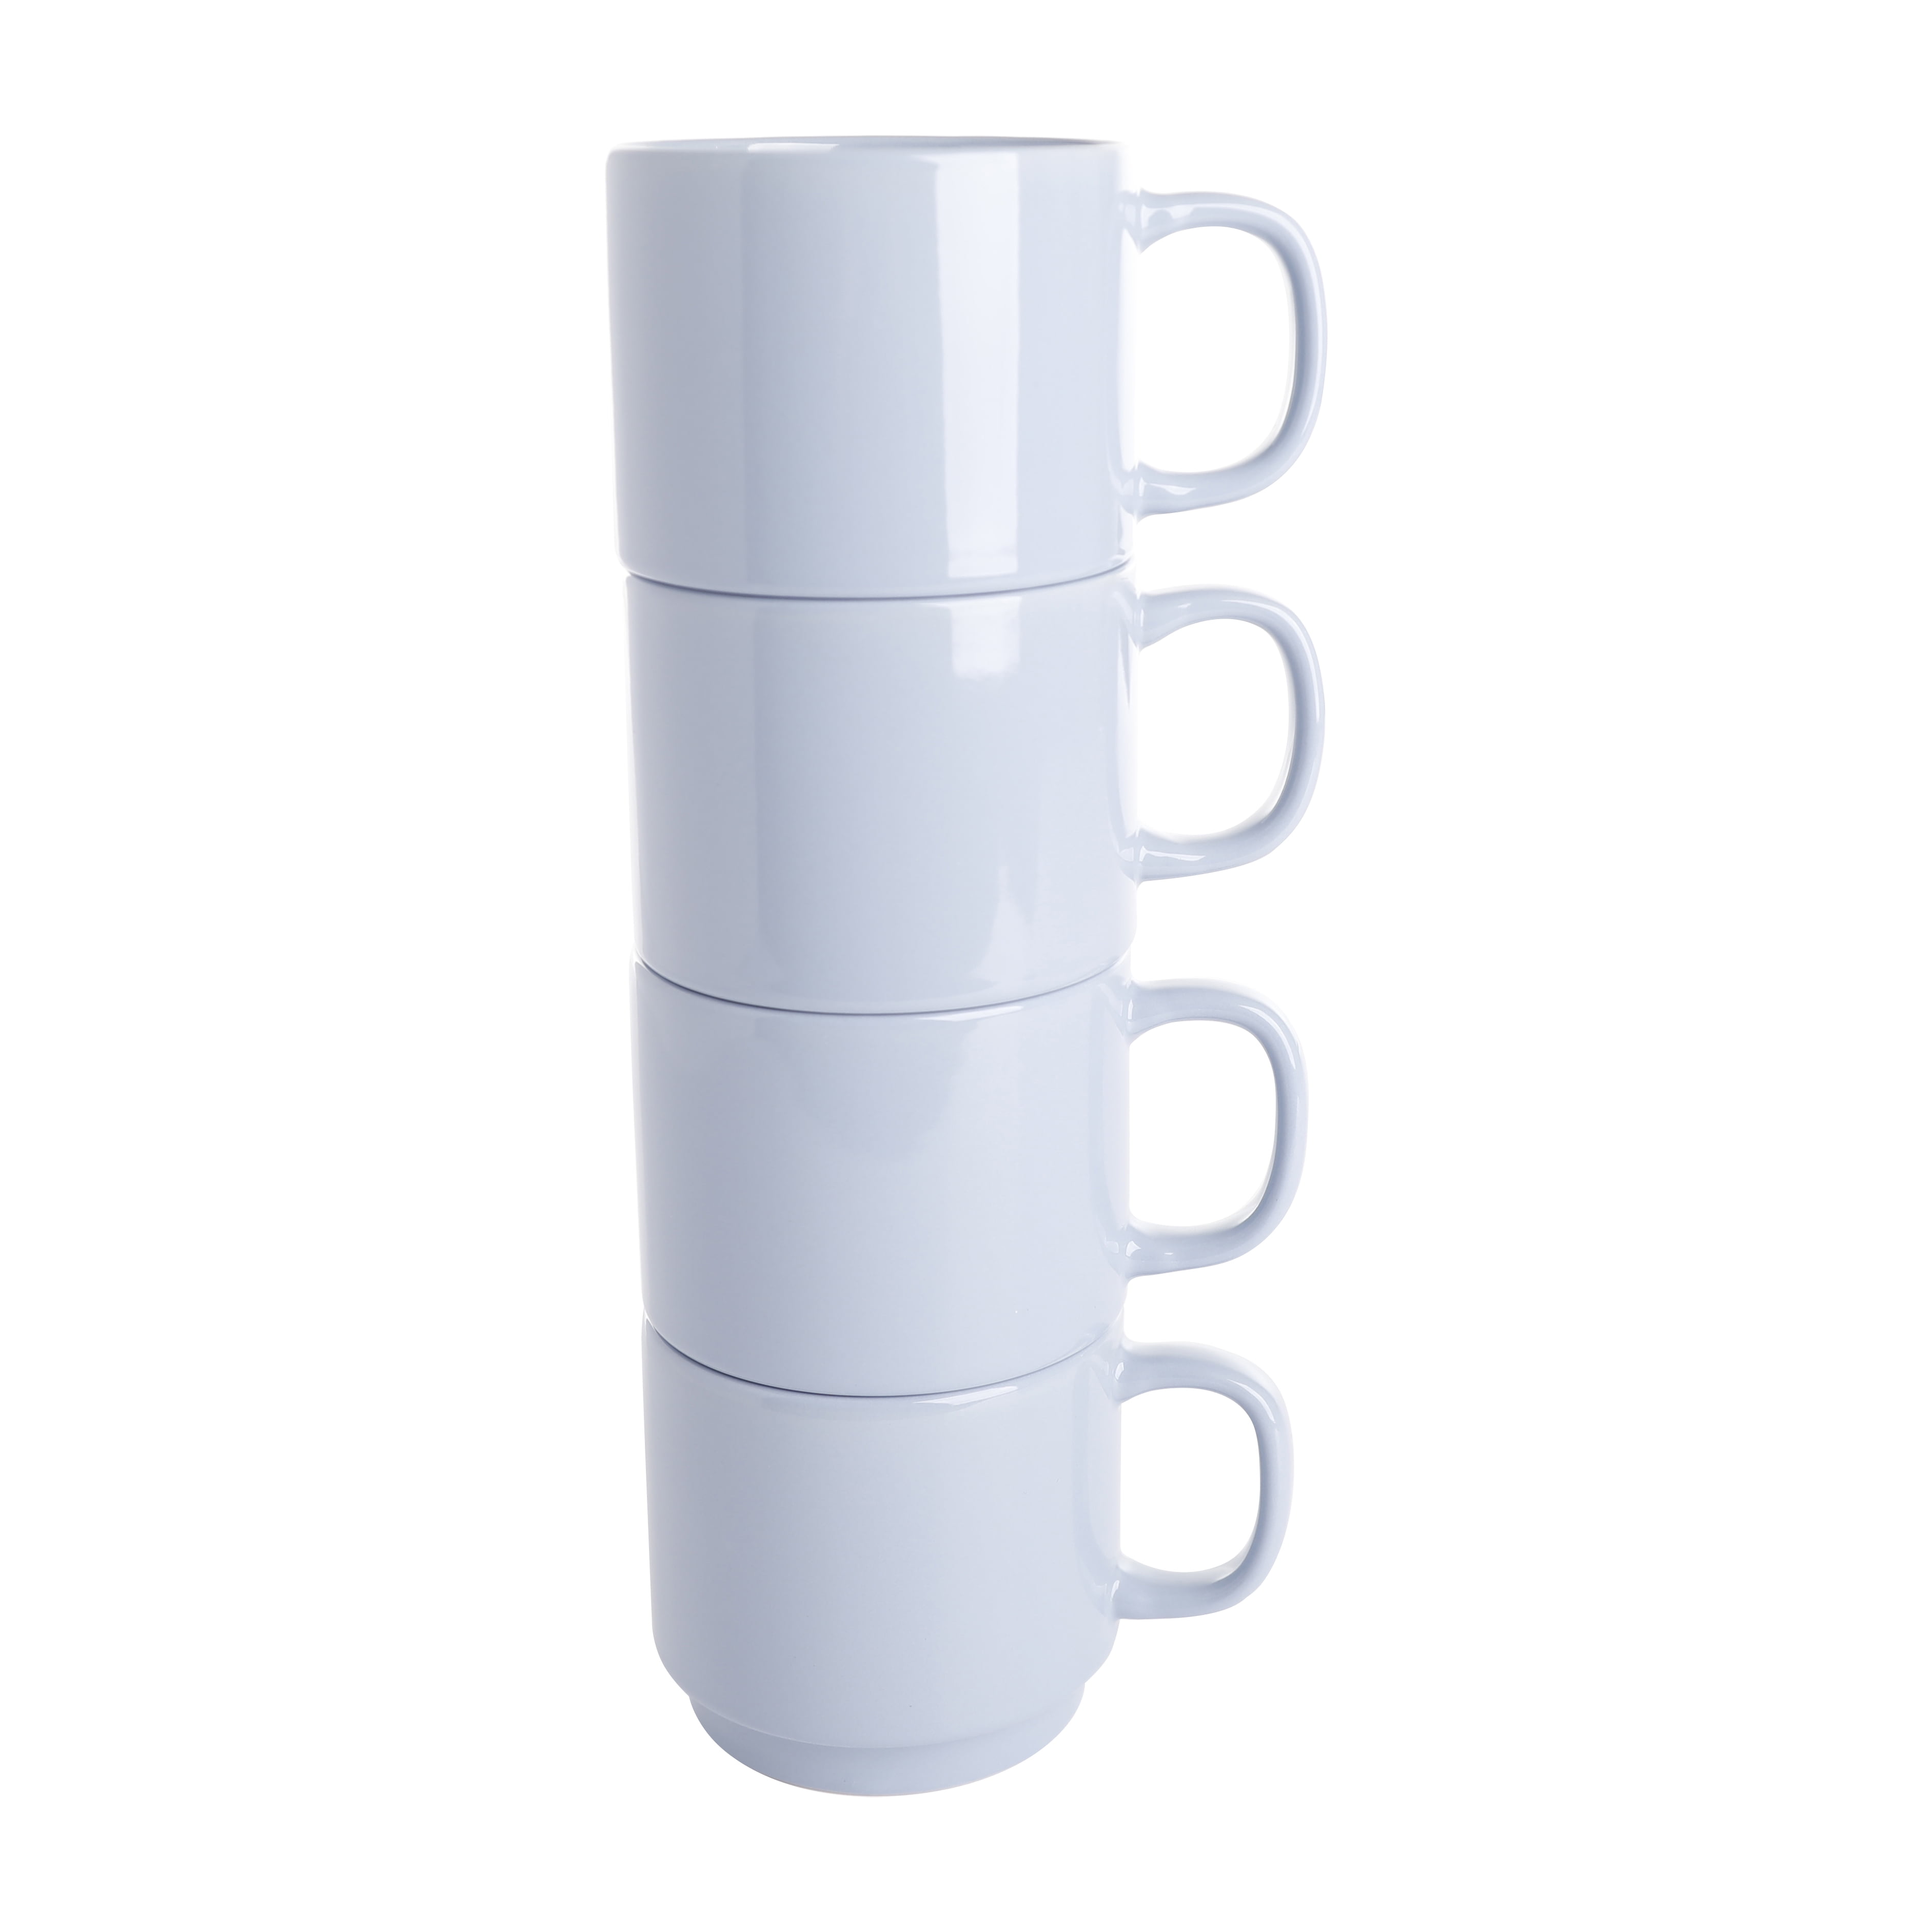 Hand warming mug,blue ceramic mug with no handle,ceramic mug,wheel thrown mug Fathers Day ergonomic mug,,ceramic cup ceramic tumbler,Dad